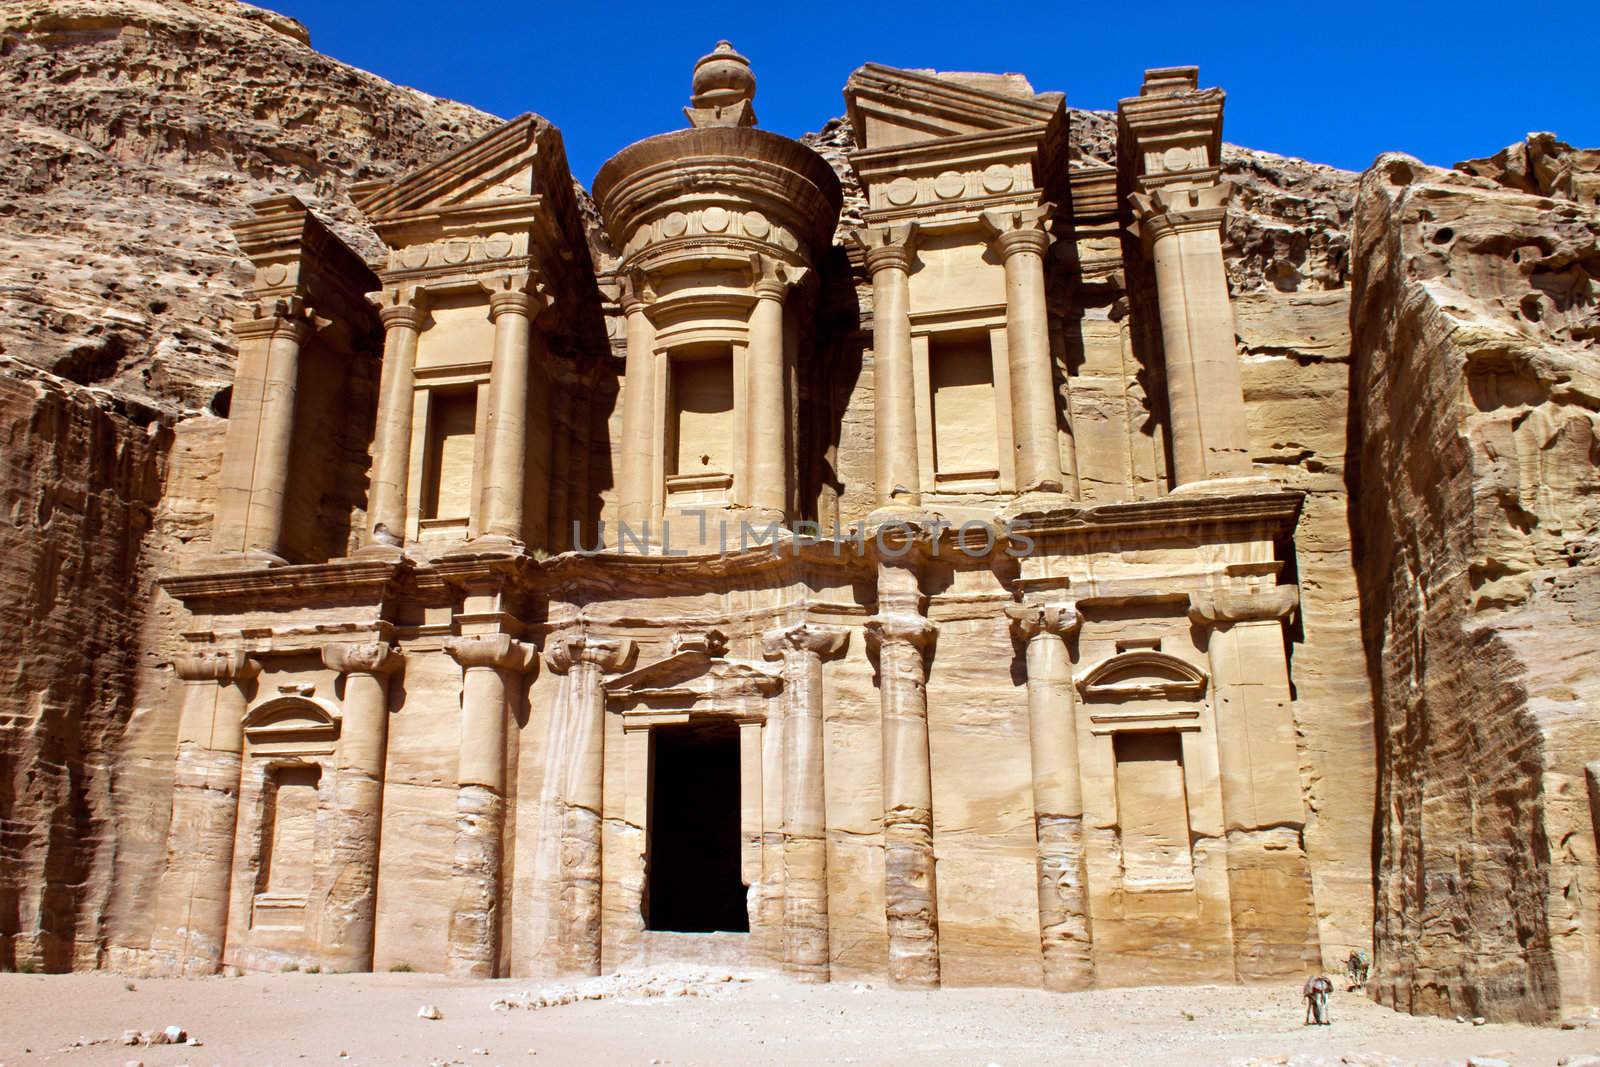 Ancient ruins of the Monastery of Petra in Jordan